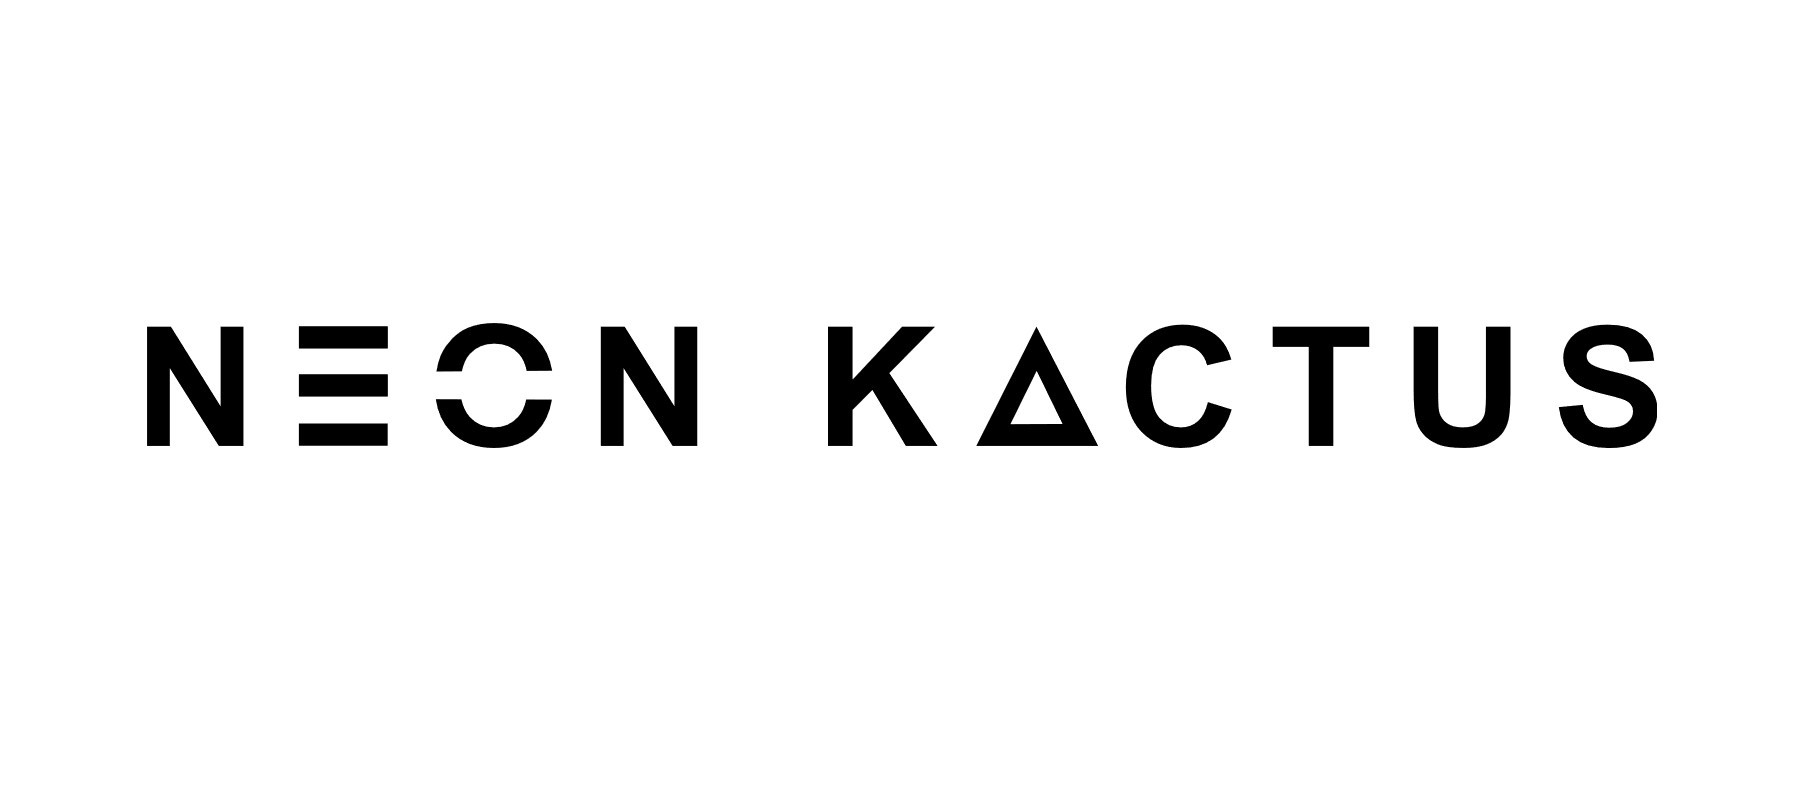 Neon Kactus2